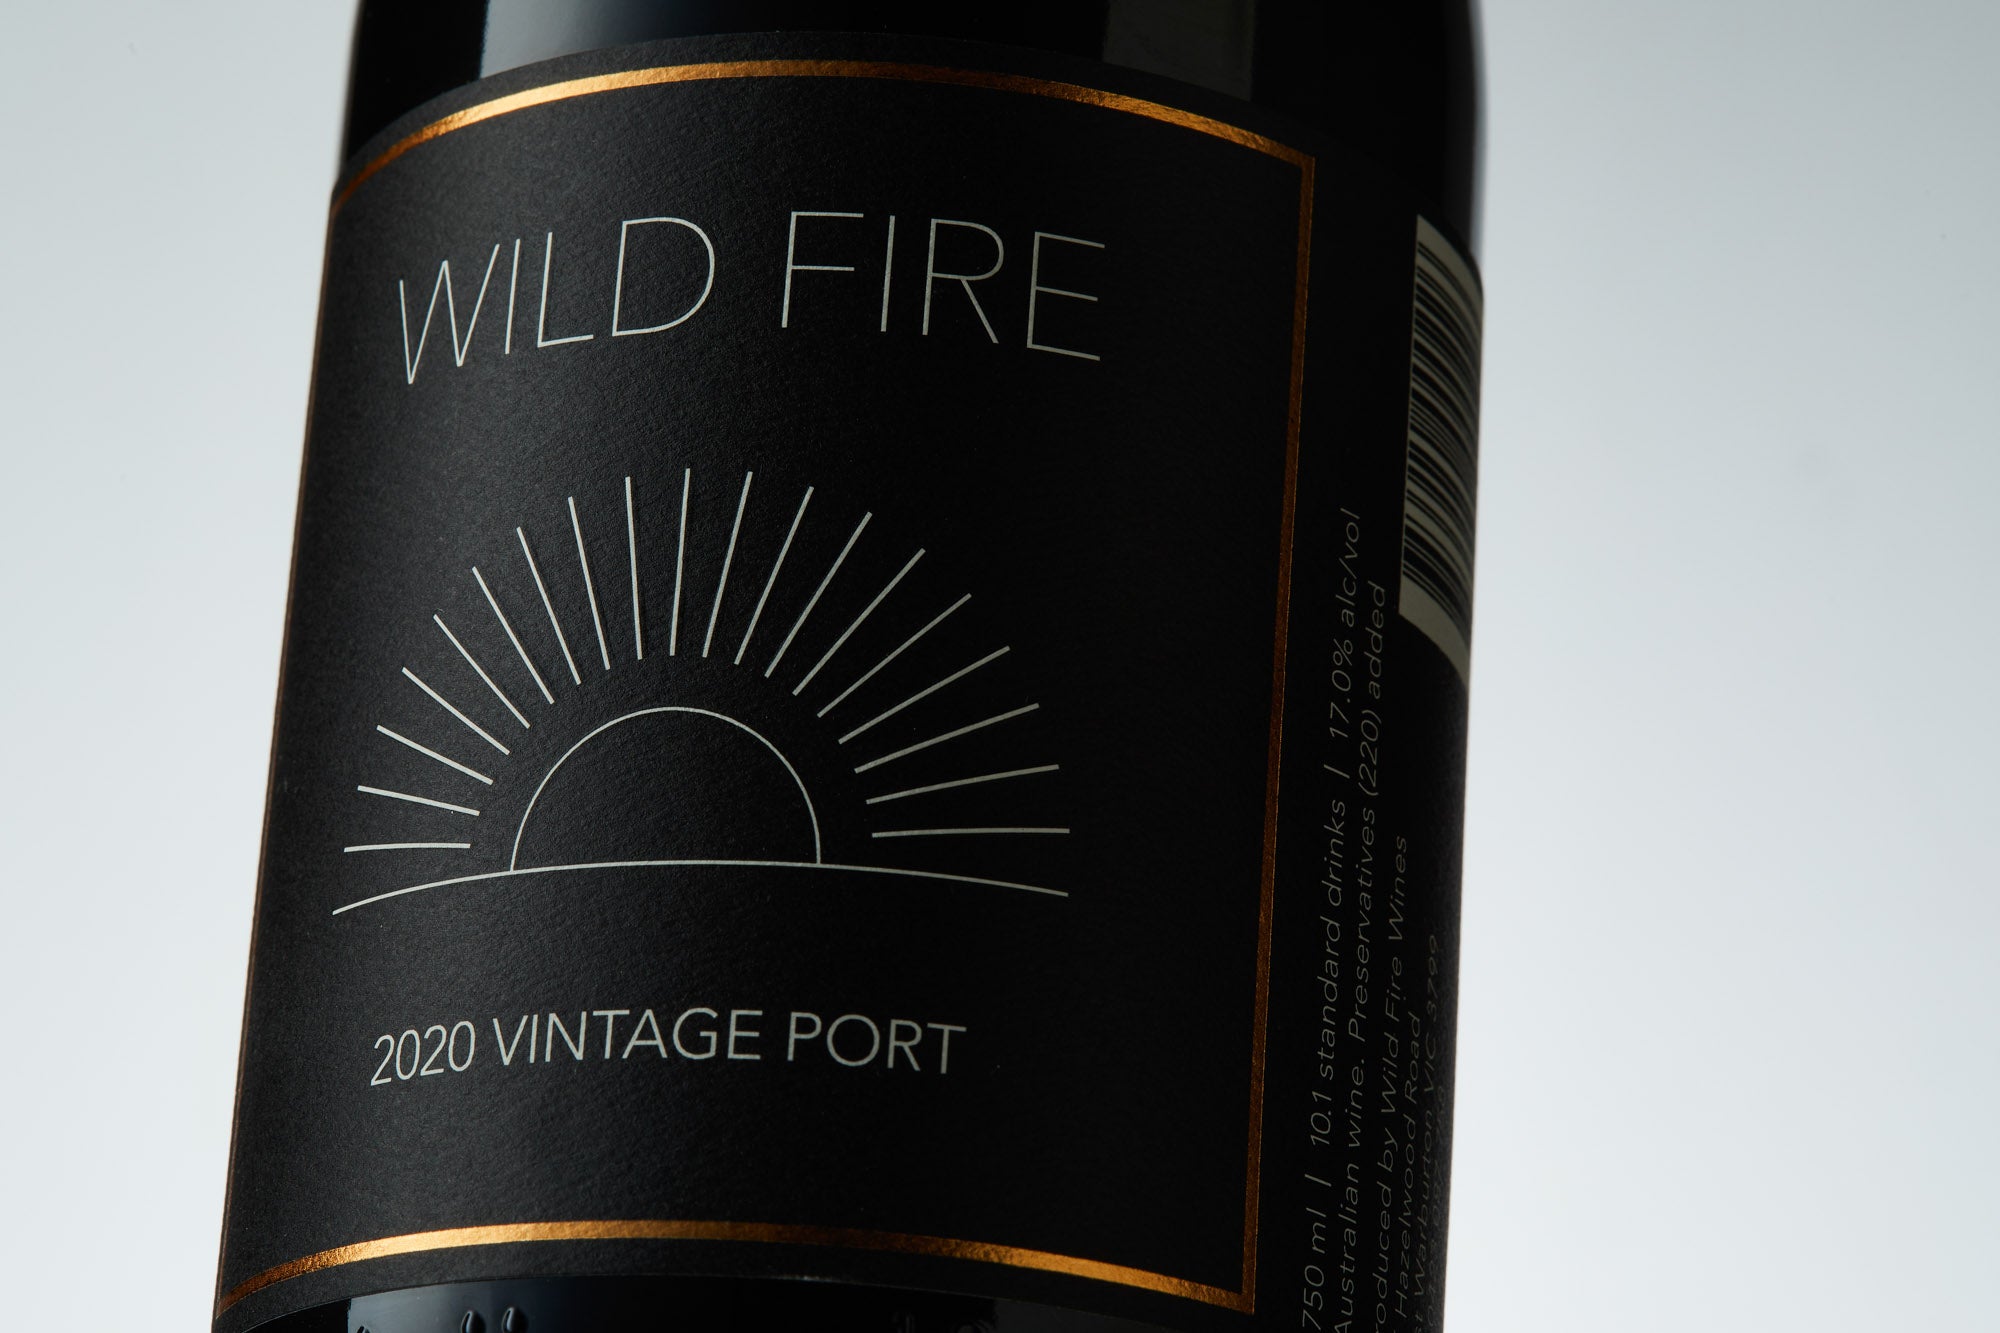 Wine Fire Vintage Port 2020